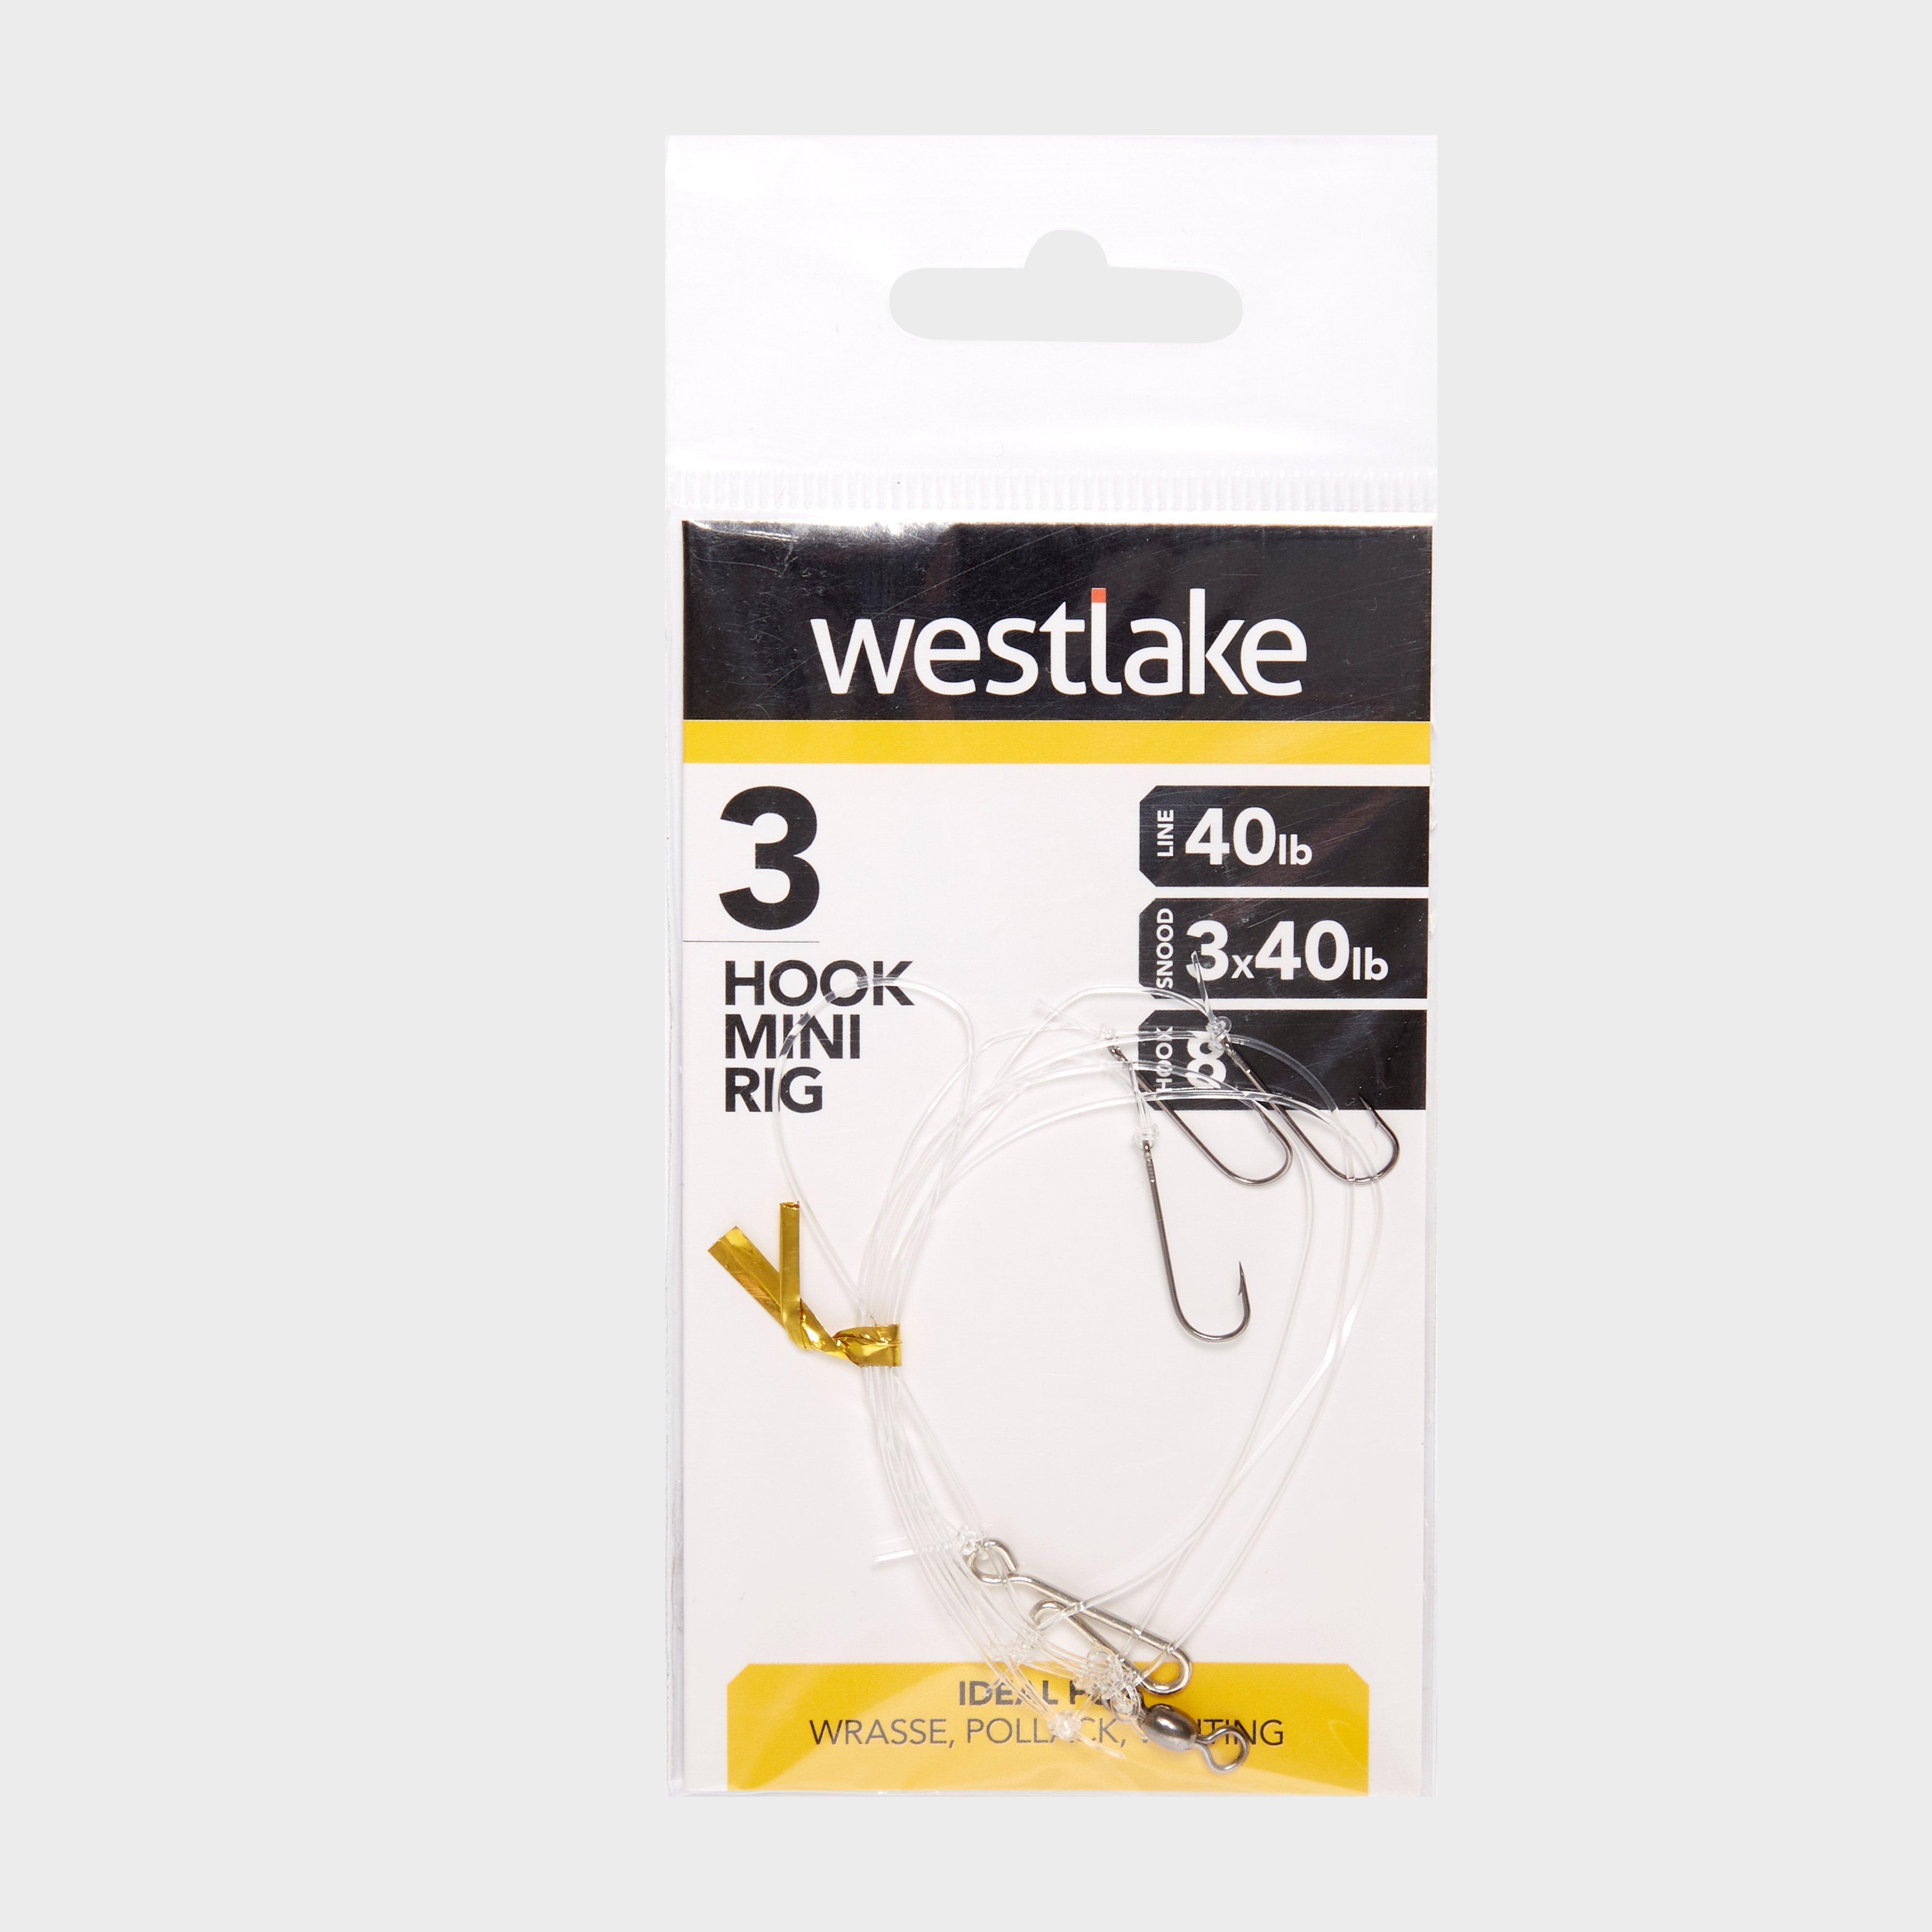 Westlake 3 Hook Mini Rig  3up  Size 8 - Multi/s  Multi/s